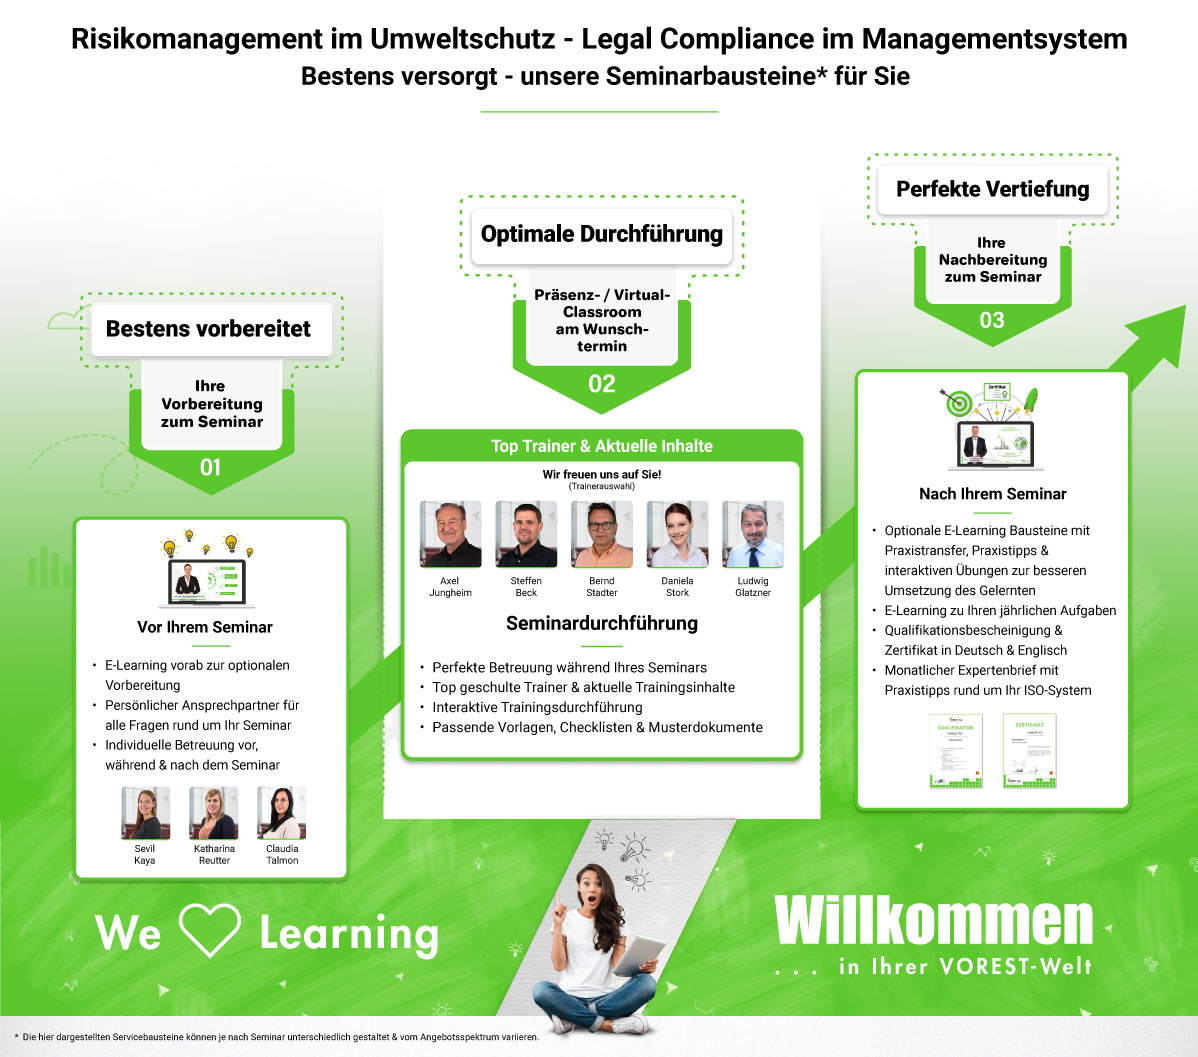 Risikomanagement im Umweltschutz - Legal Compliance im Managementsystem